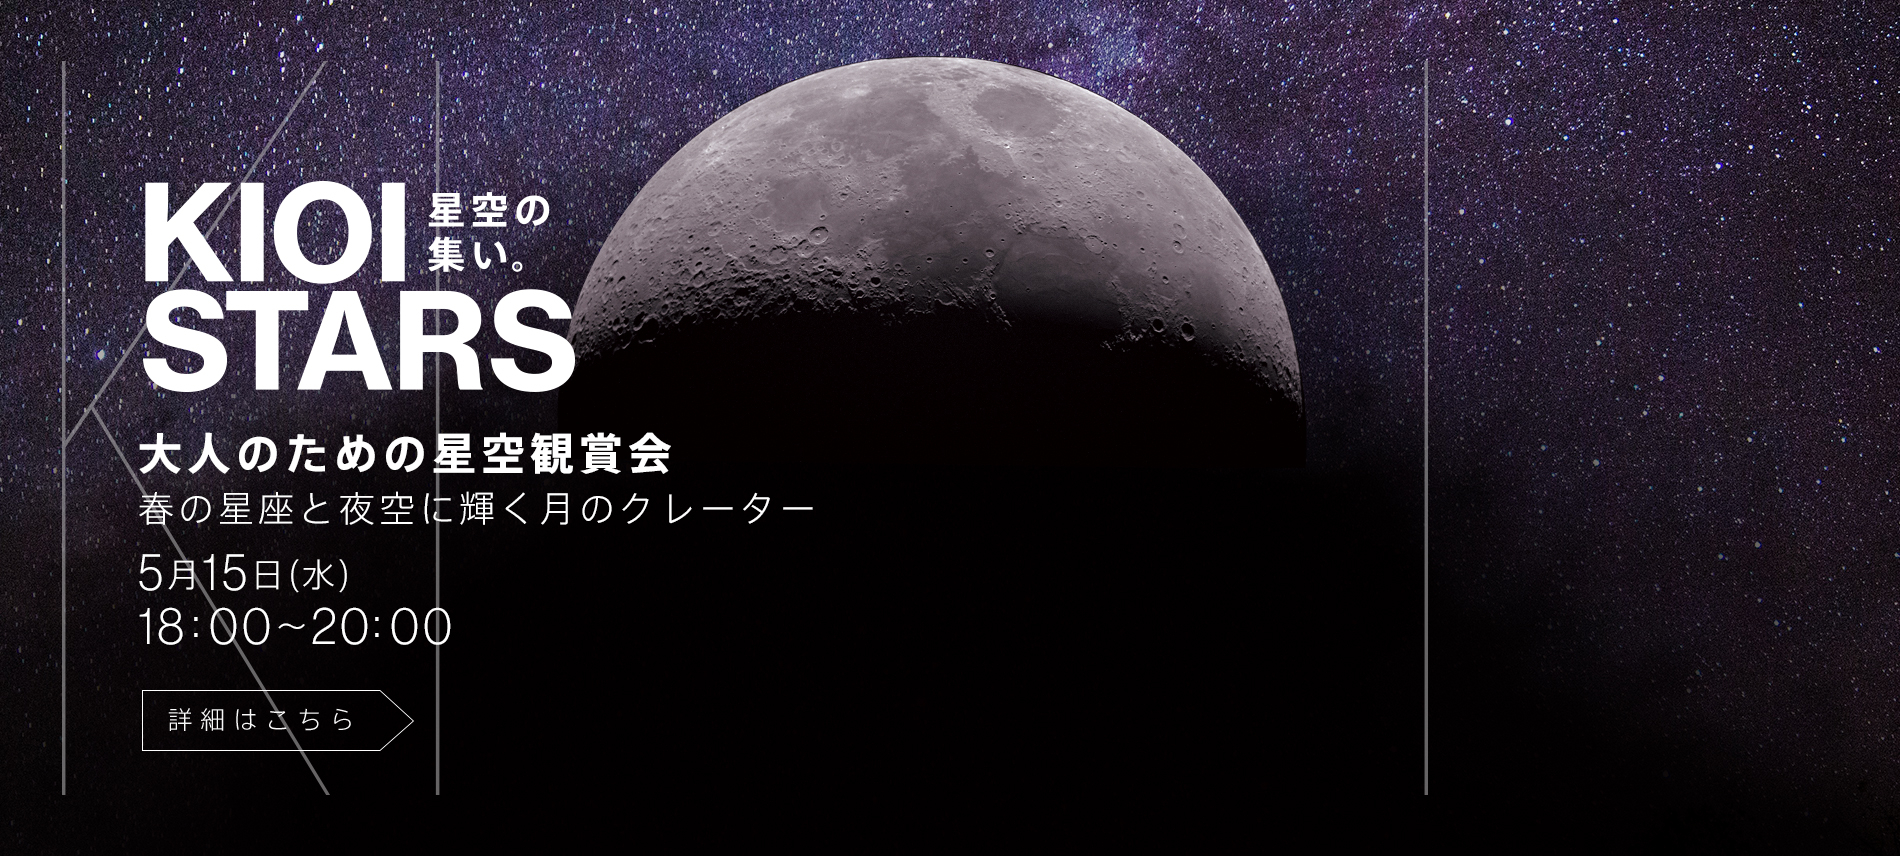 KIOI STARS 星空の集い。「大人のための星空鑑賞会・春の星座と夜空に輝く月のクレーター」